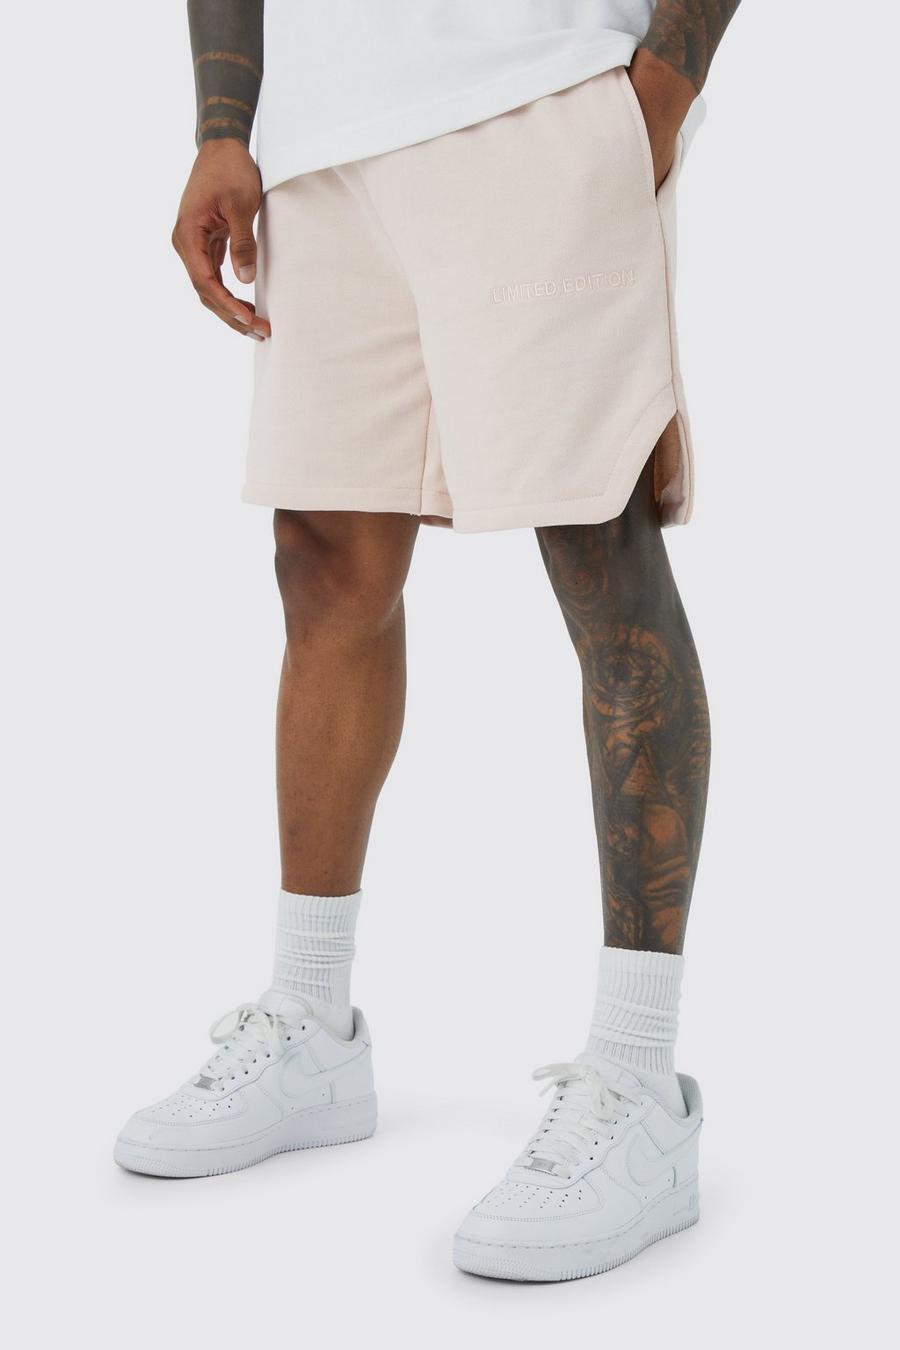 Lockere Limited Shorts, Pale pink